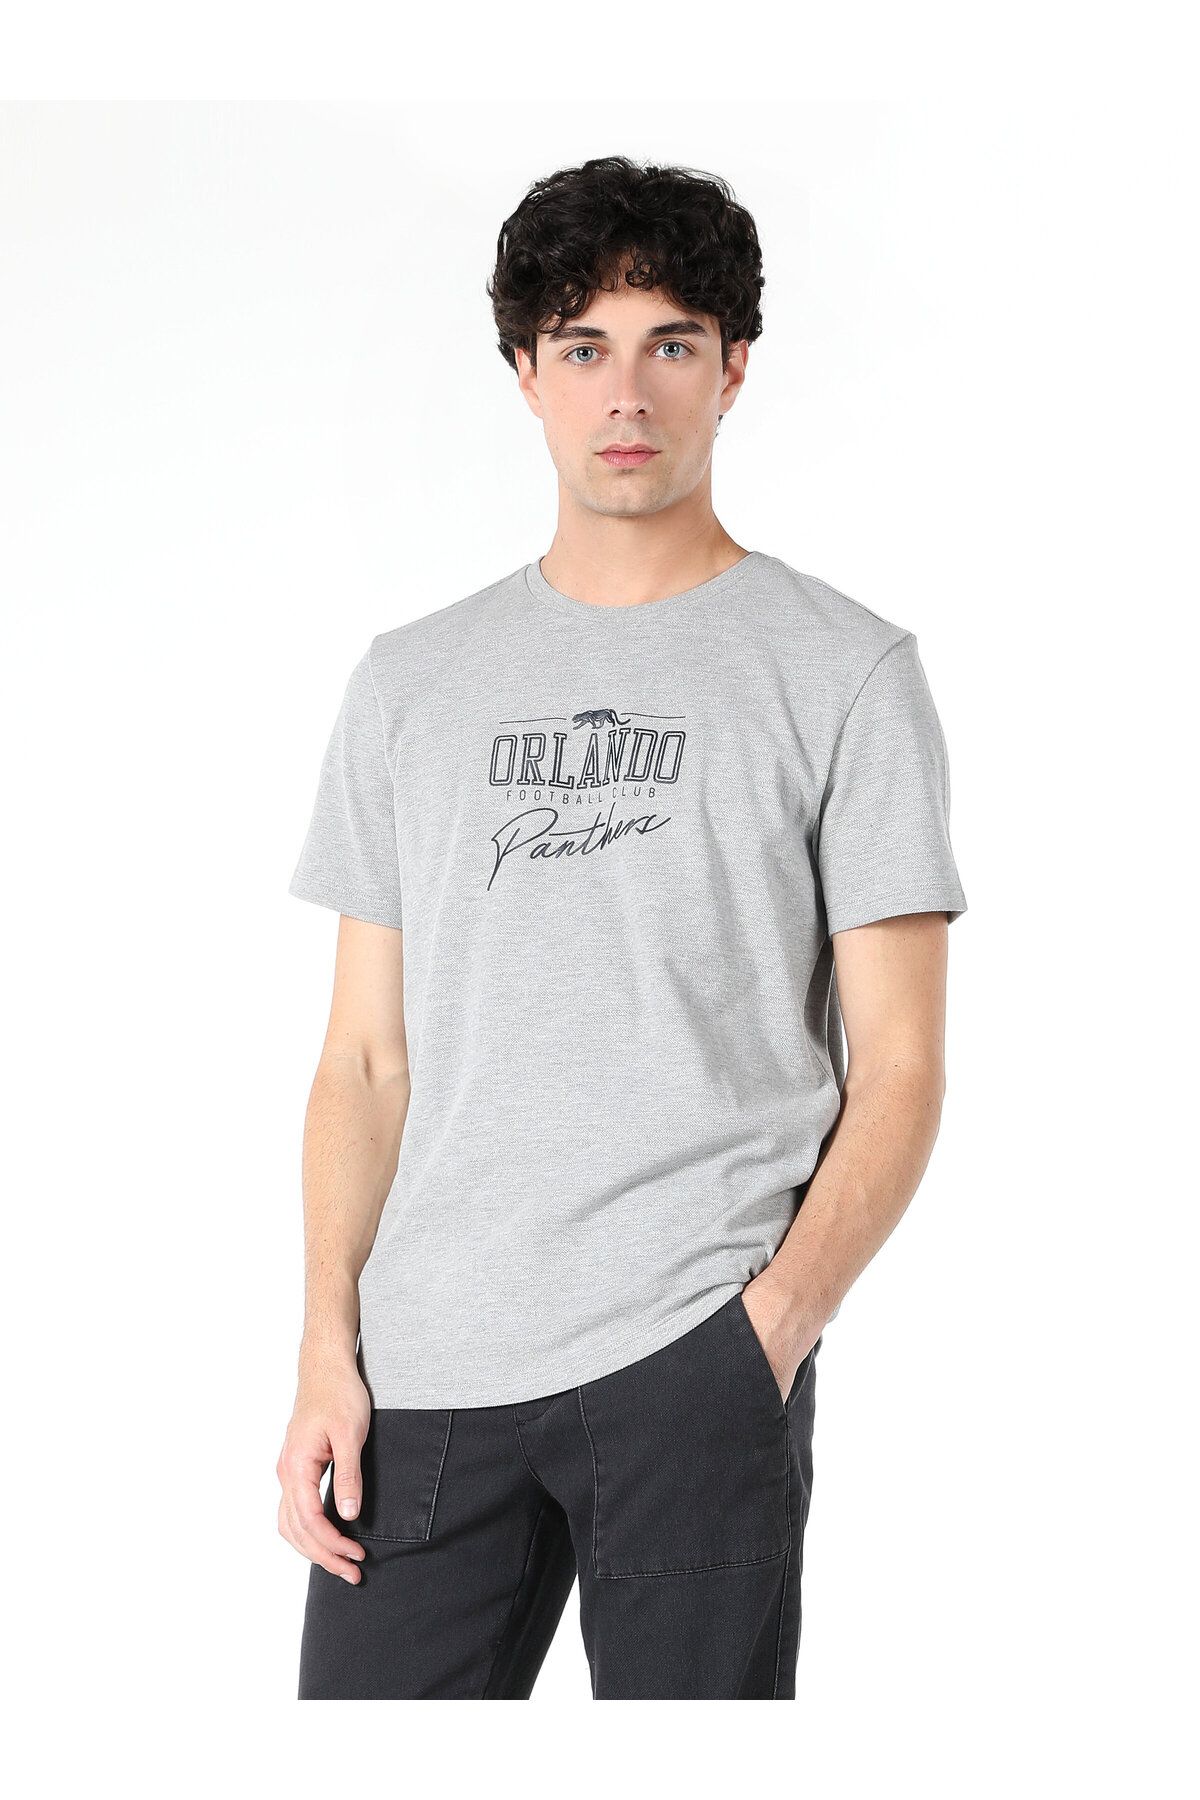 Colin’s یقه دوچرخه تناسب منظم چاپ شده مردان خاکستری بازوی کوتاه T shirt